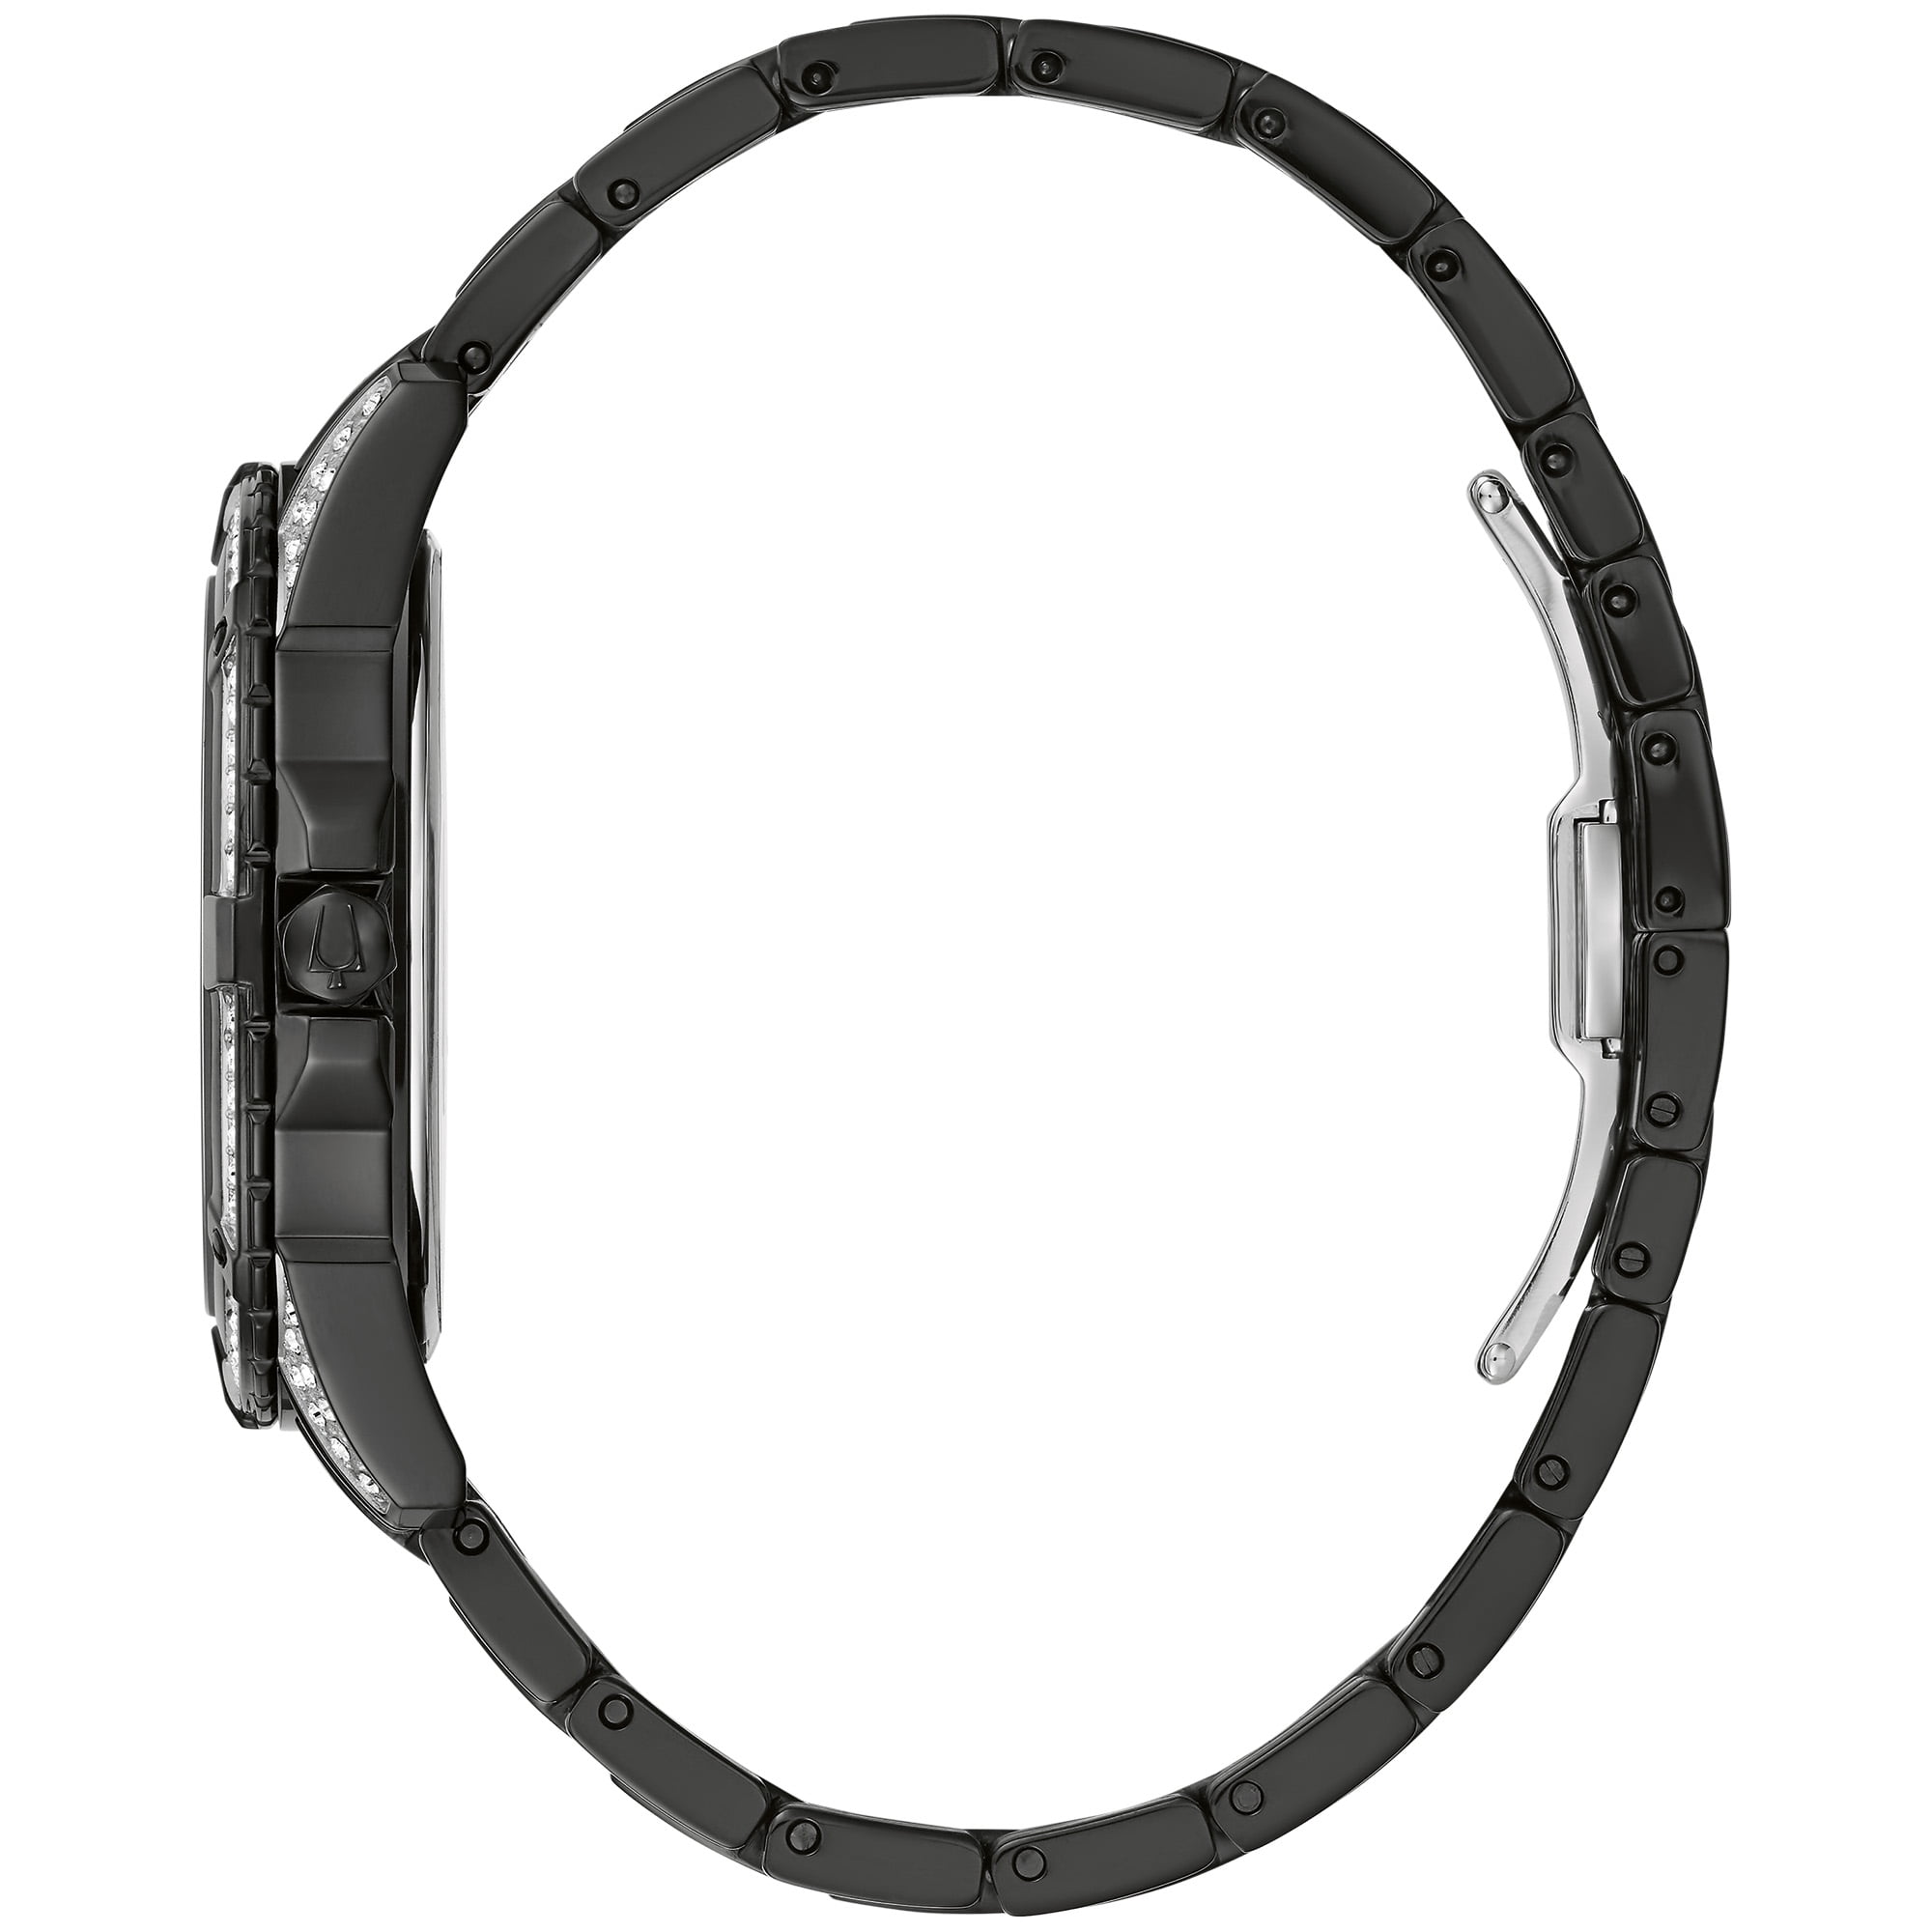 Bulova 96K105 Men's Crystal Black Dial Bracelet Watch Gift Set